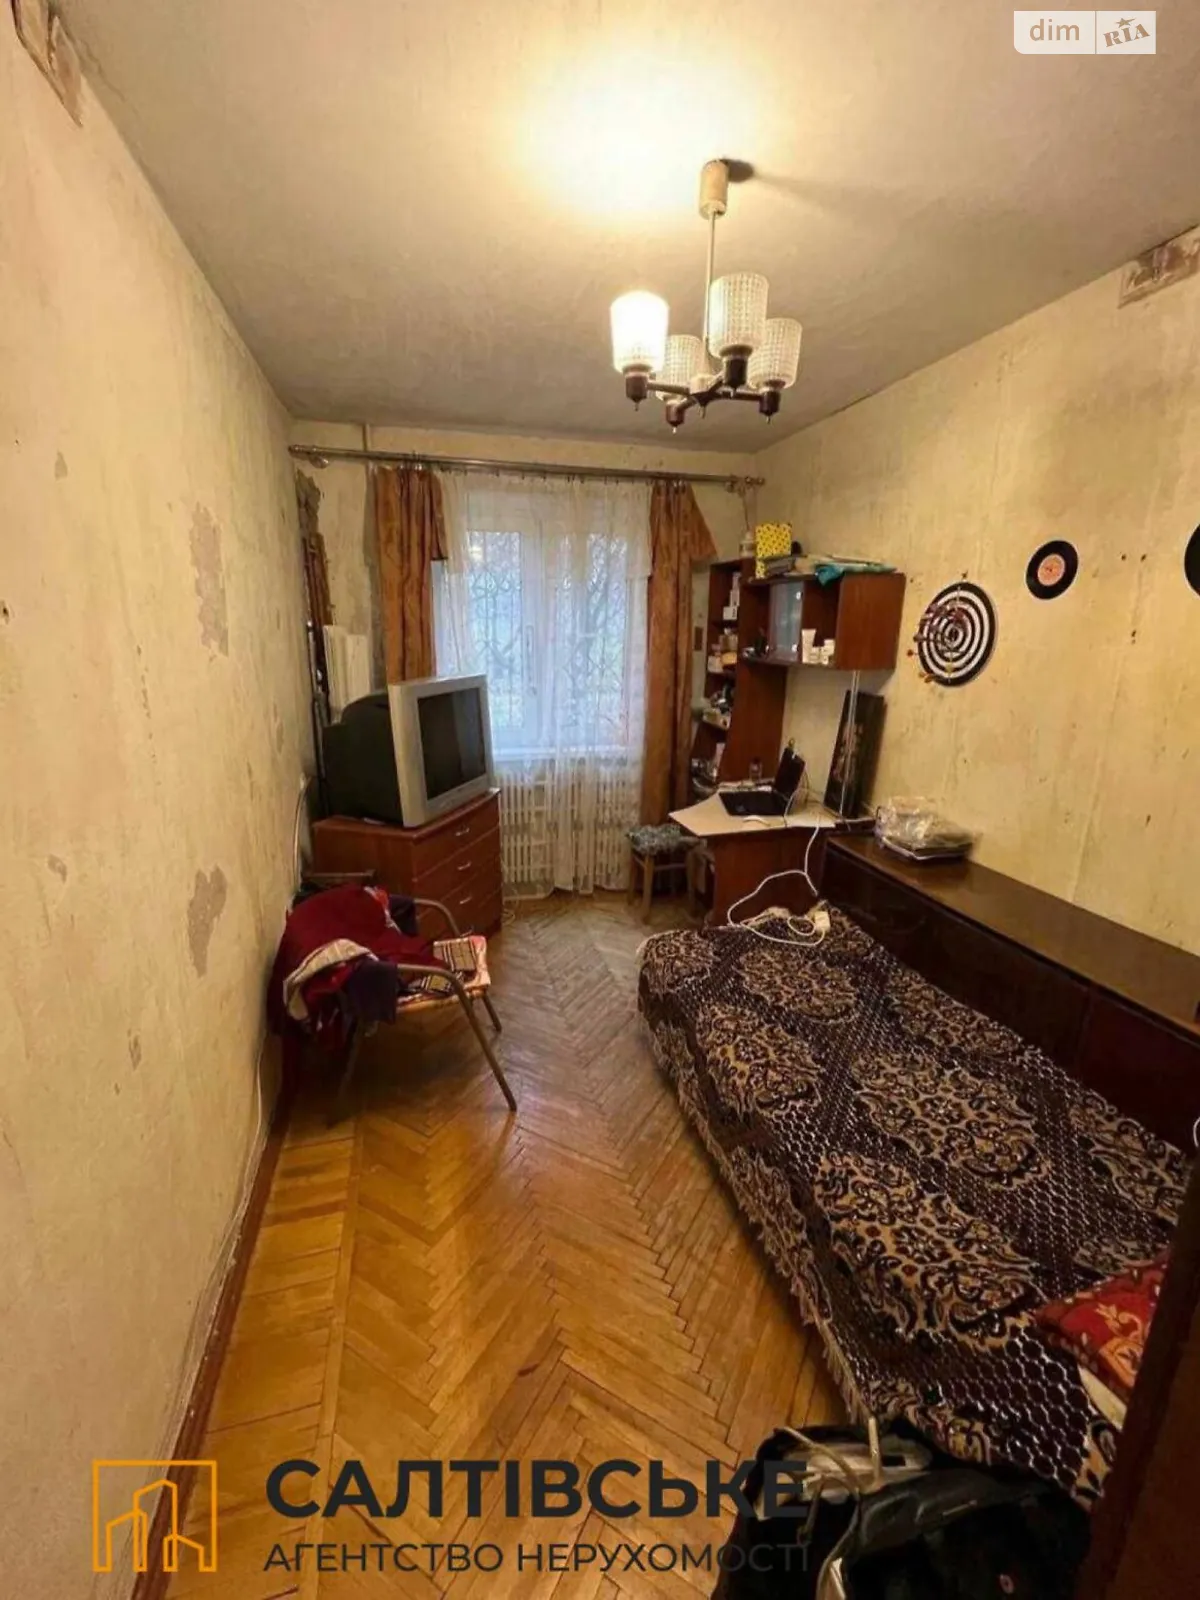 Продается комната 48 кв. м в Харькове - фото 2